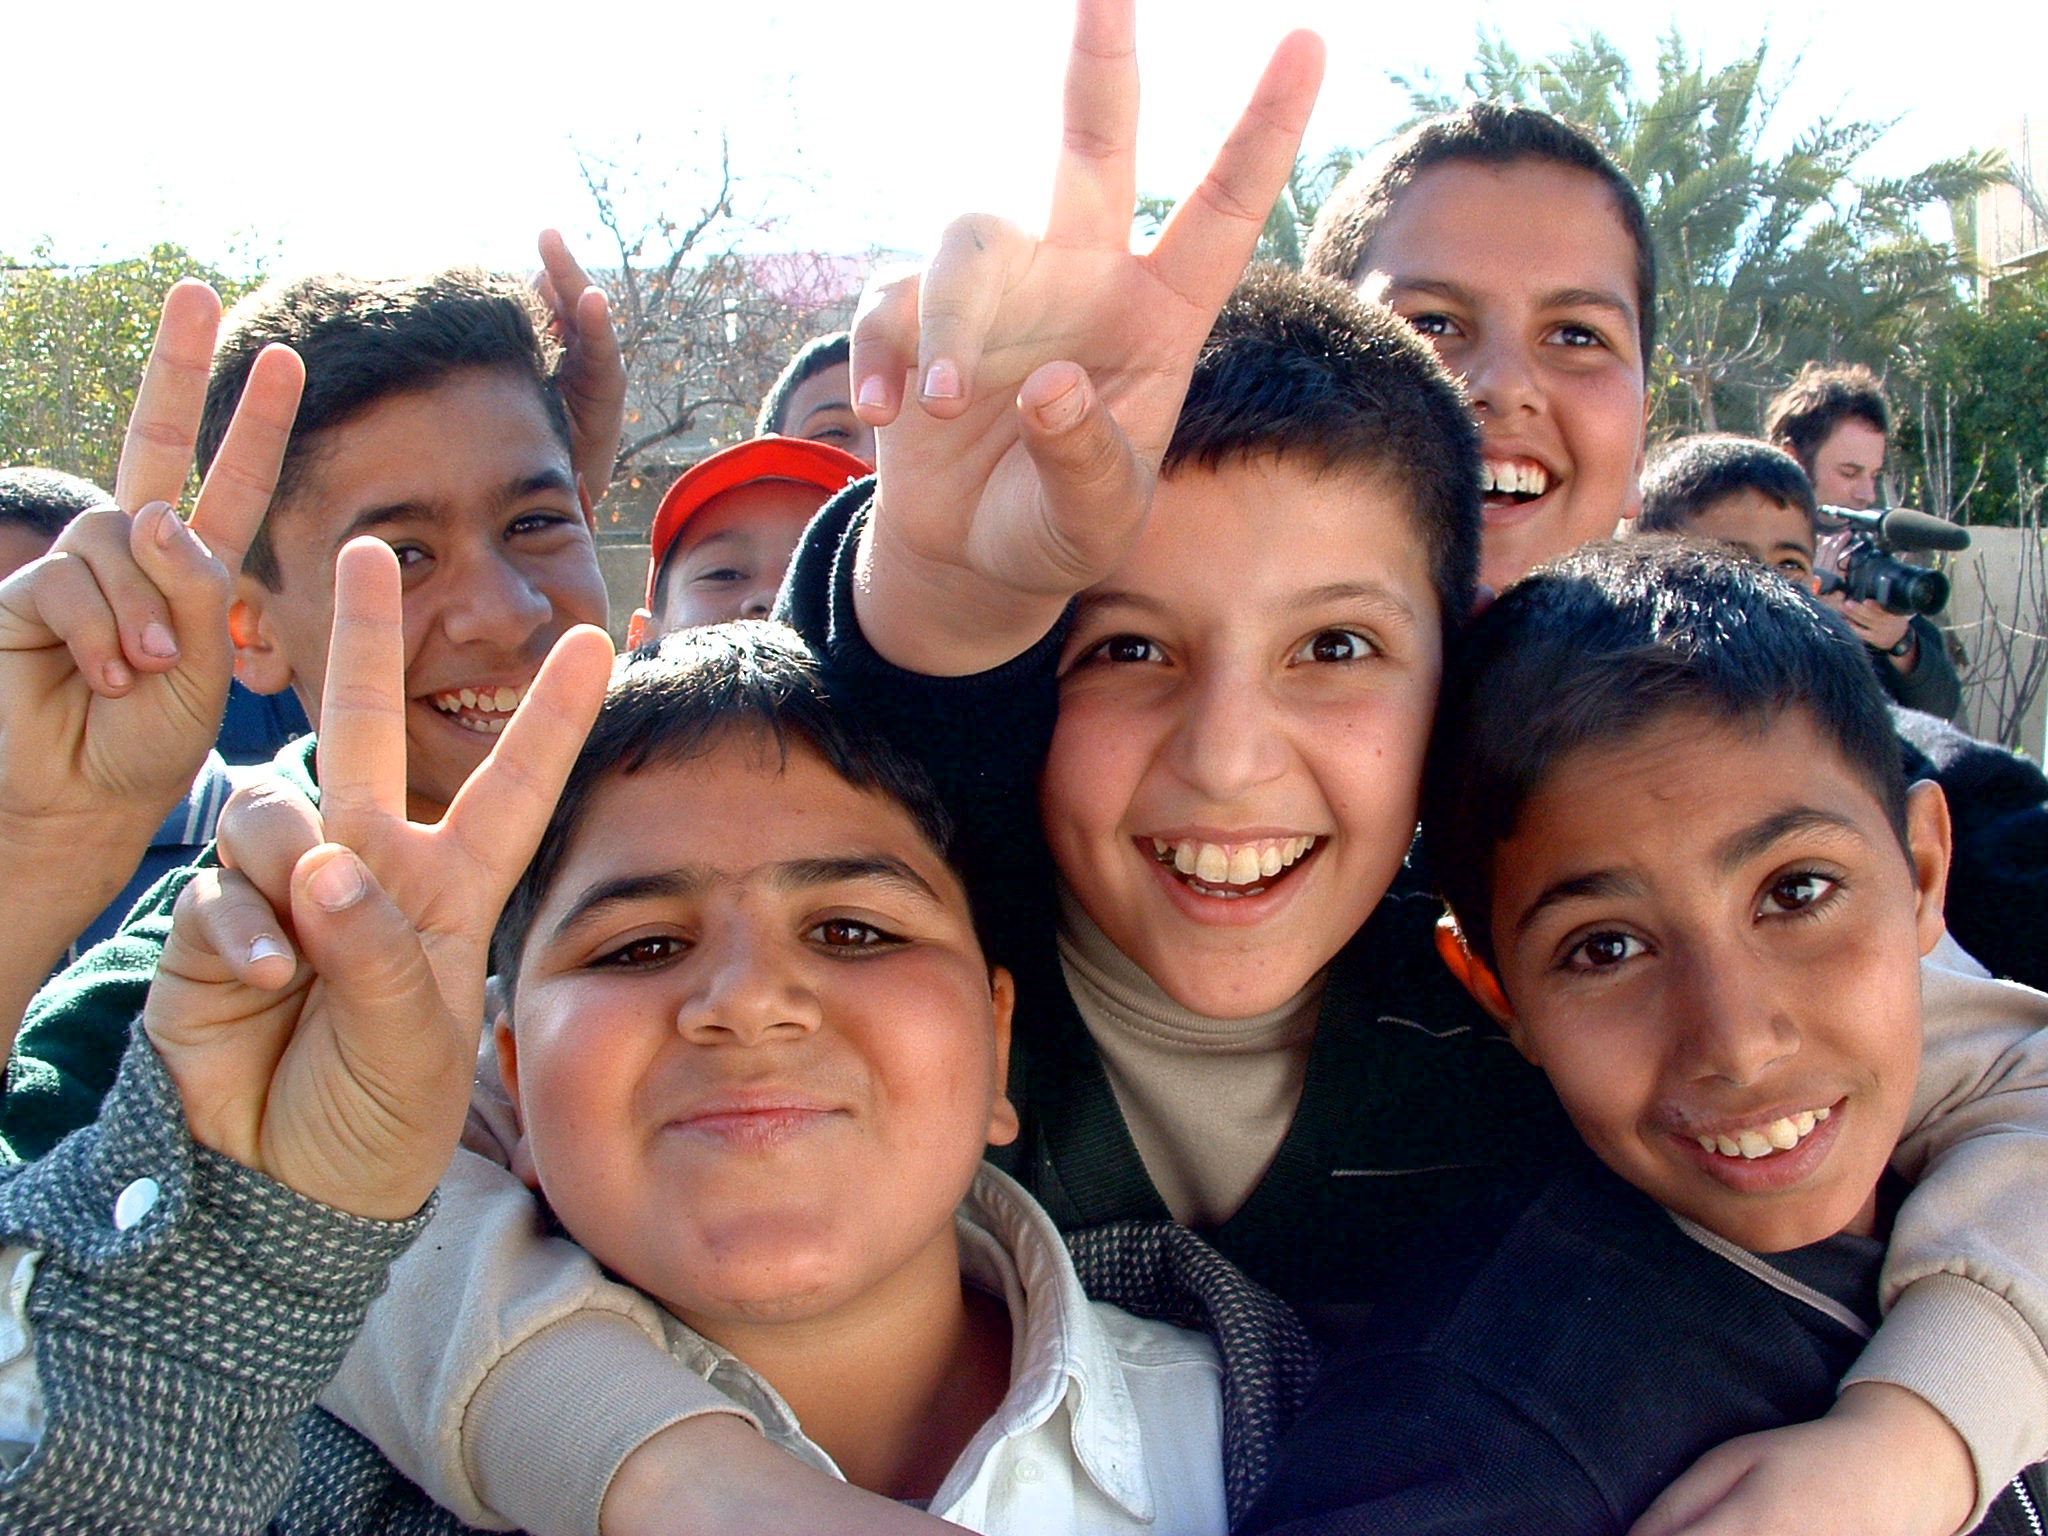 Iraqi boys giving peace sign